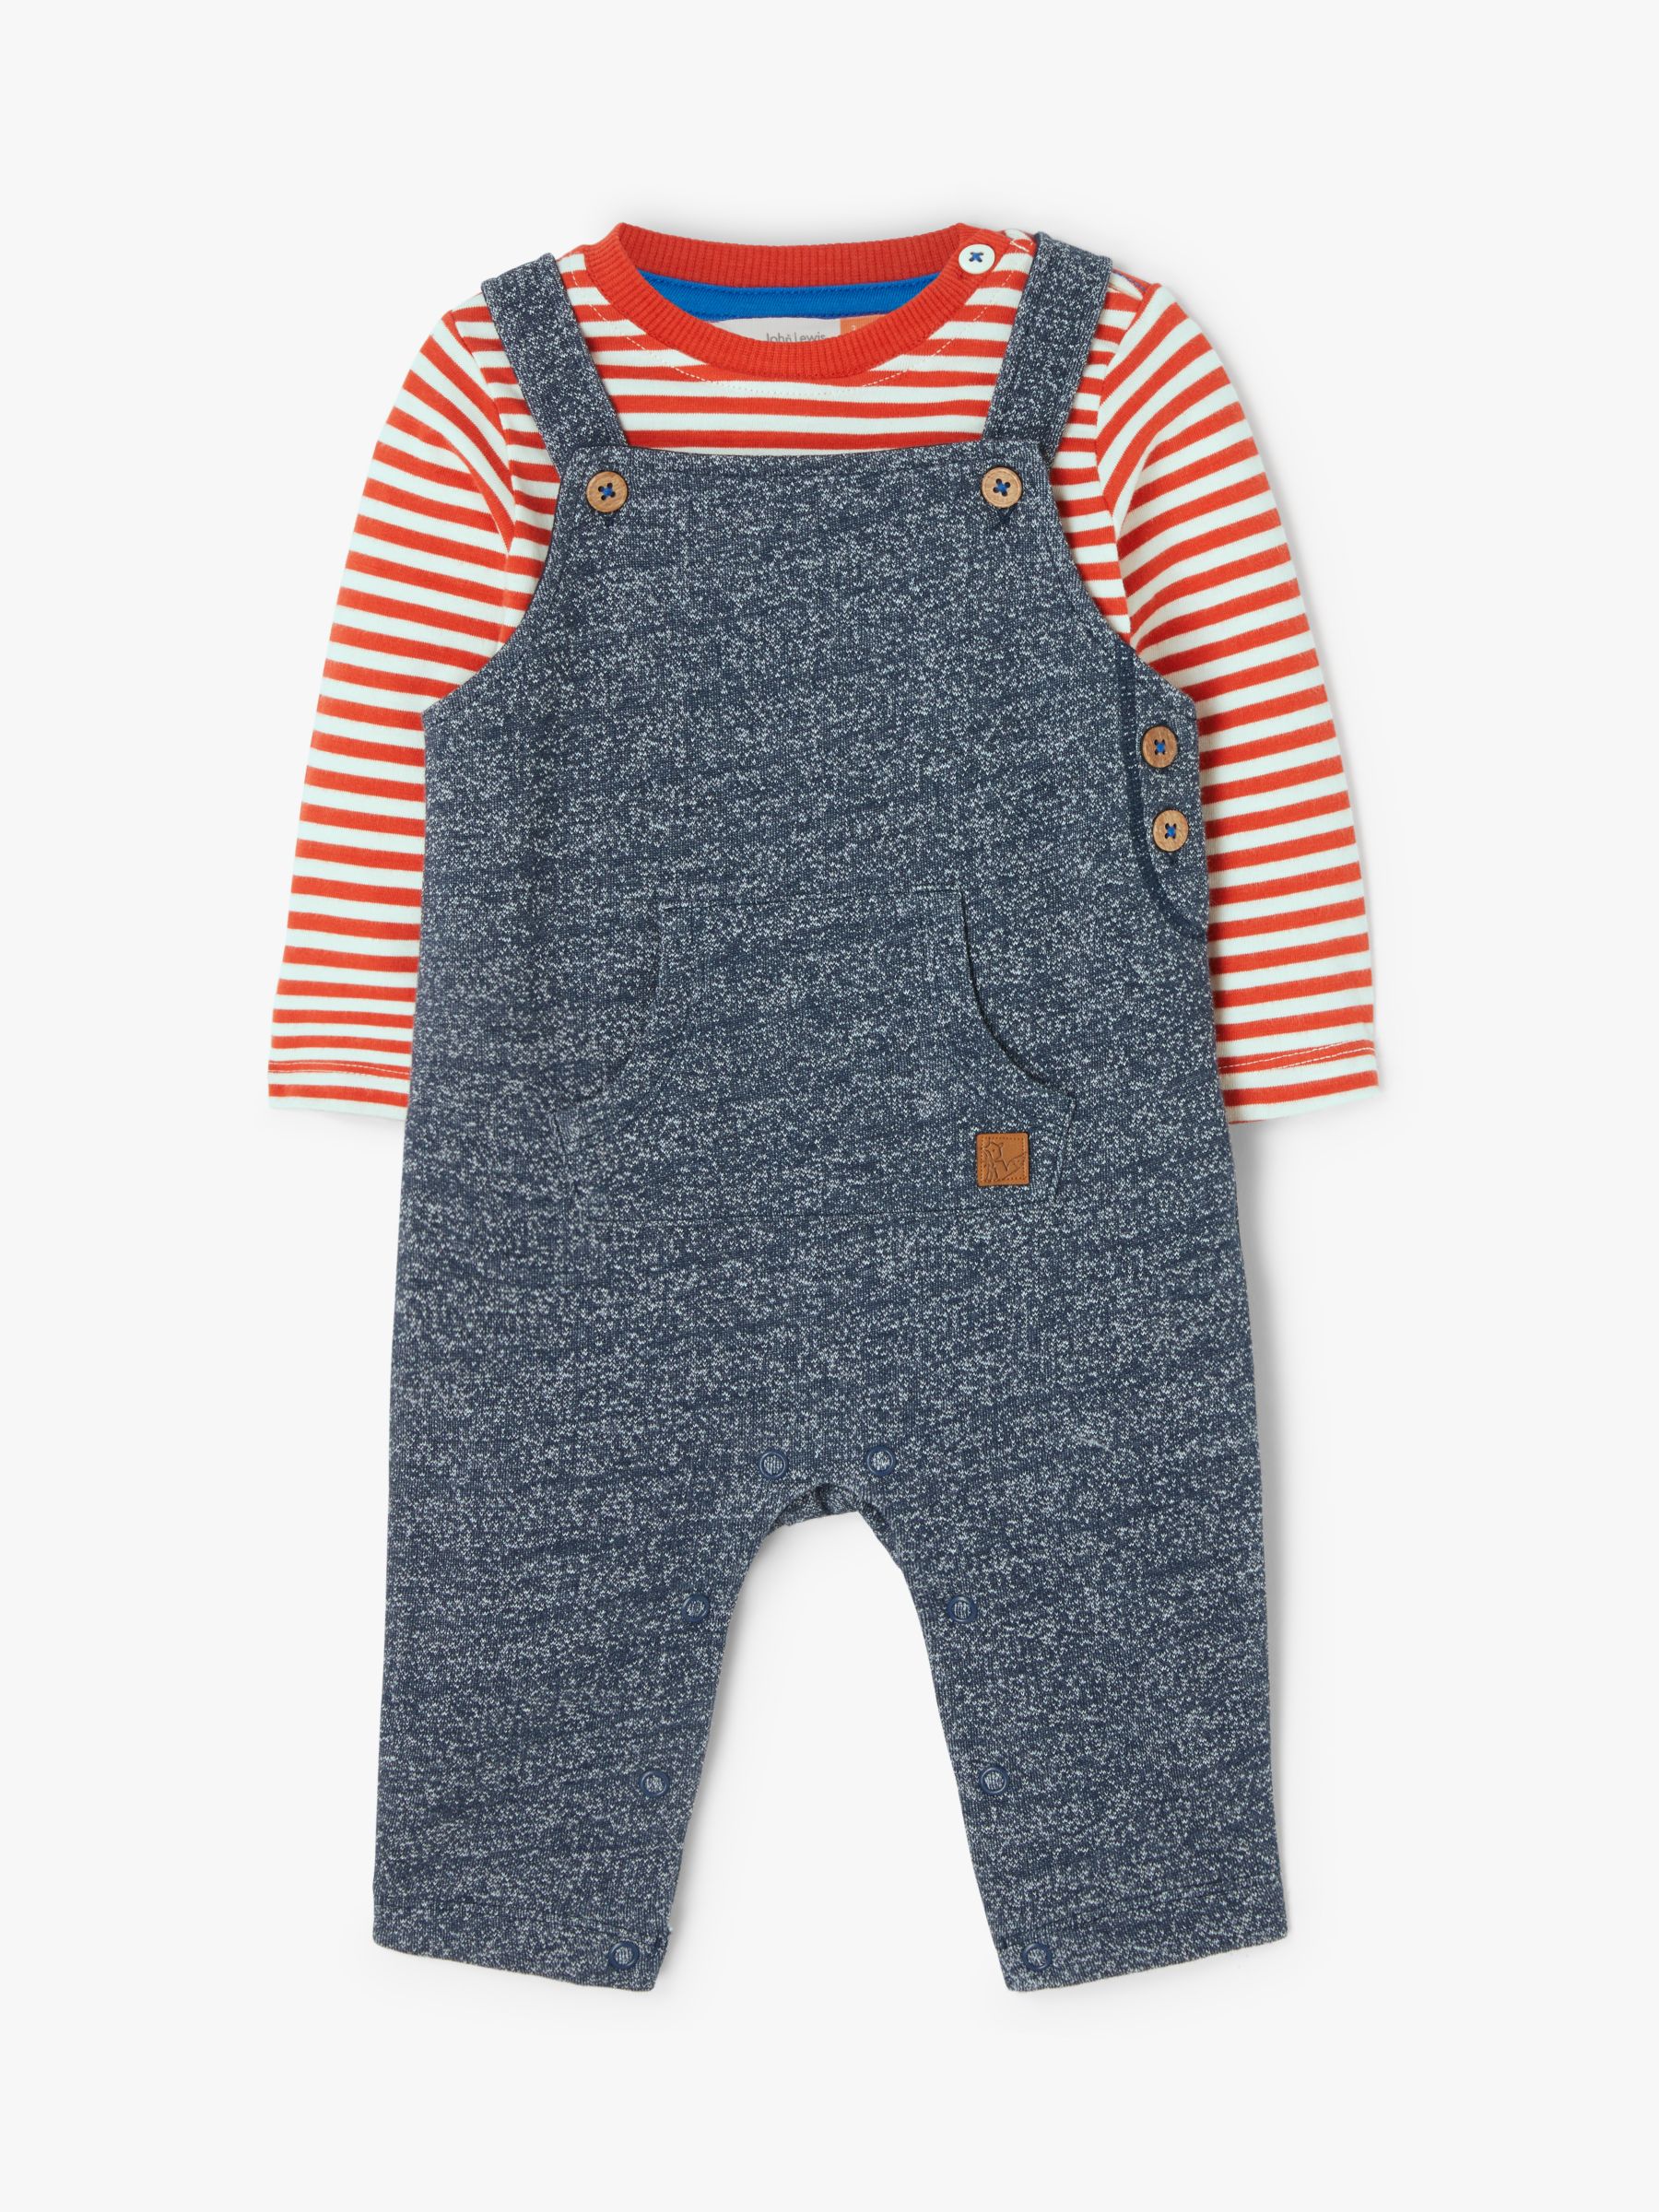 John Lewis & Partners Baby GOTS Organic Cotton Dungaree and Striped T-Shirt Set, Blue